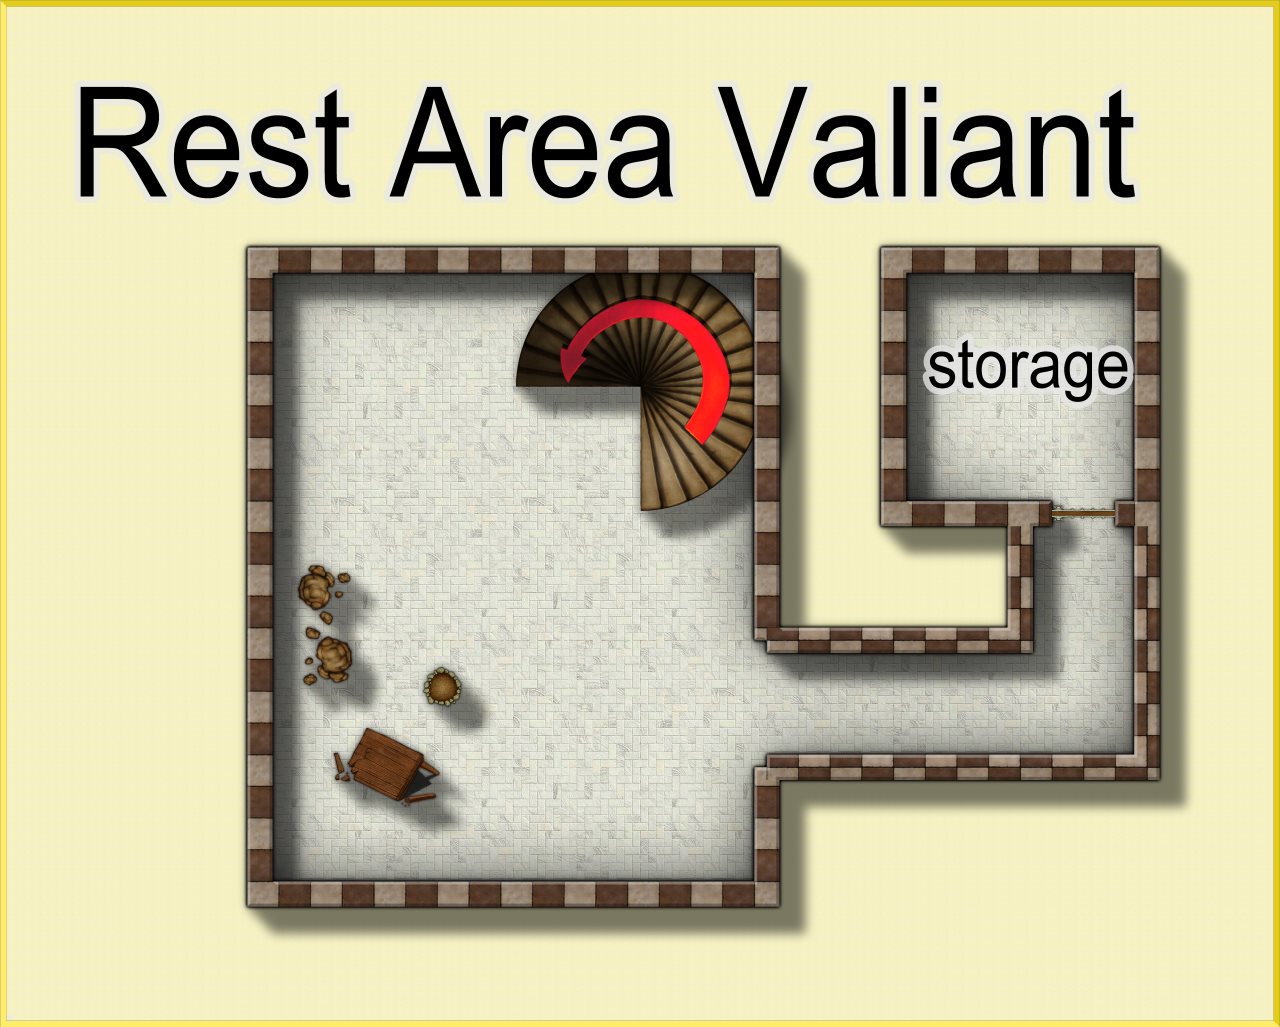 Nibirum Map: rorial halls rest area valiant by JimP